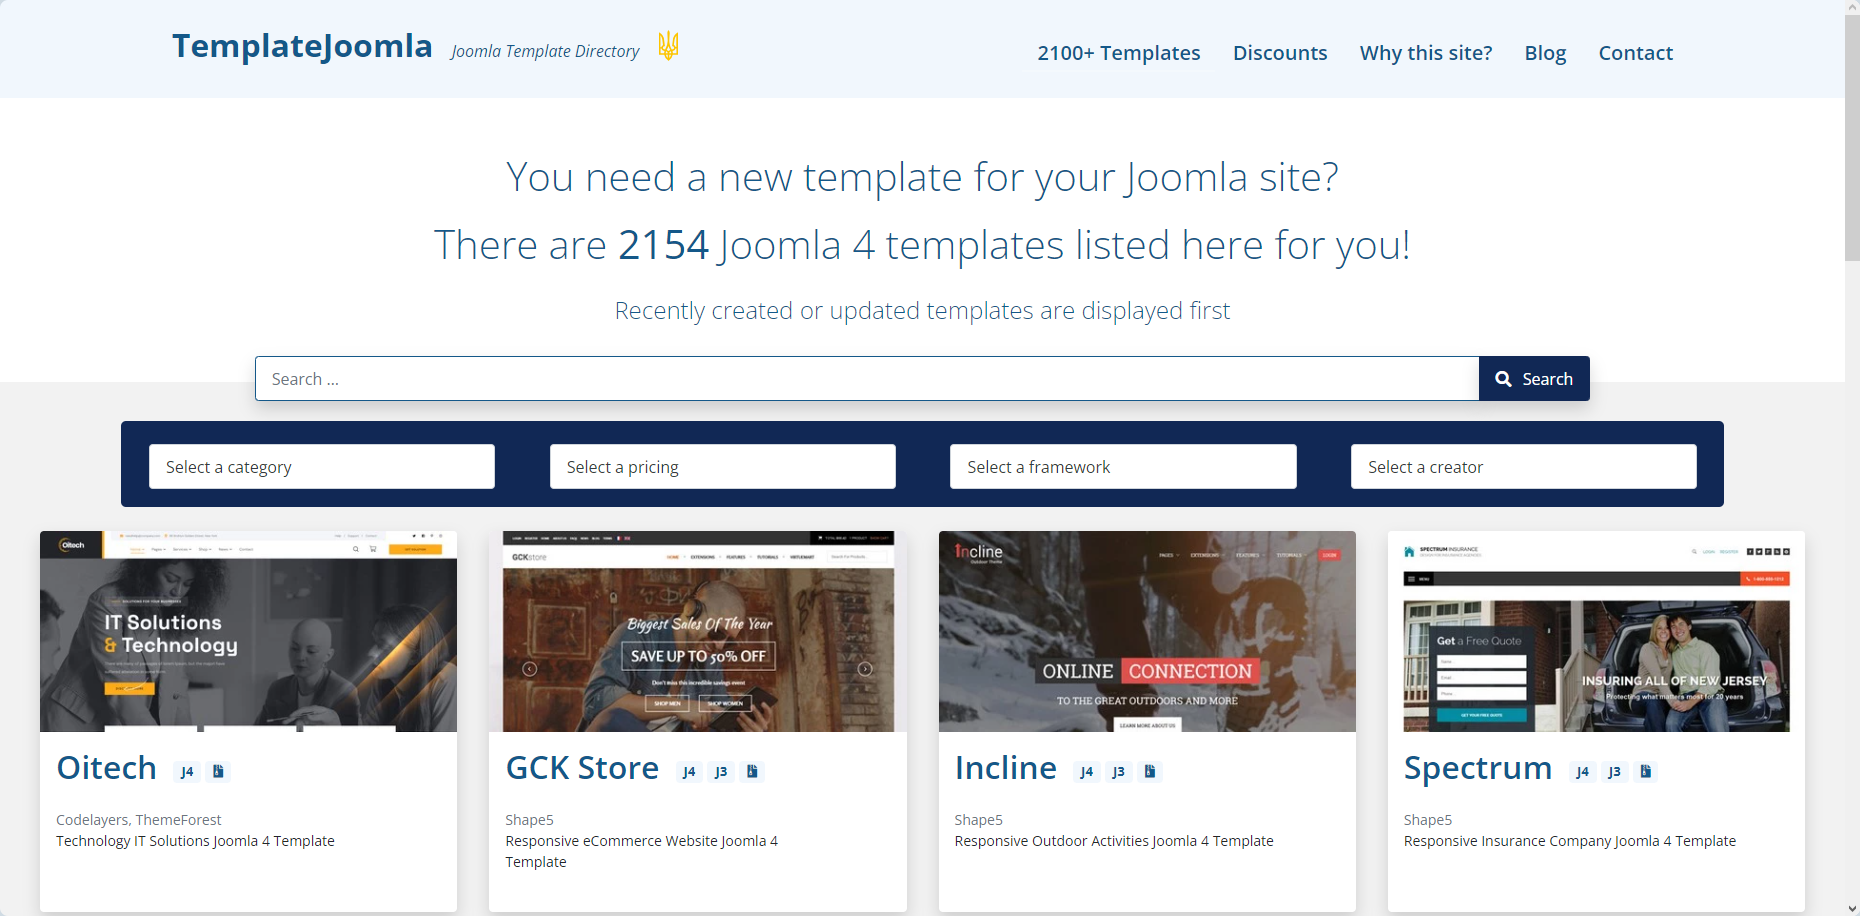 Joomla templates directory - templatejoomla.com